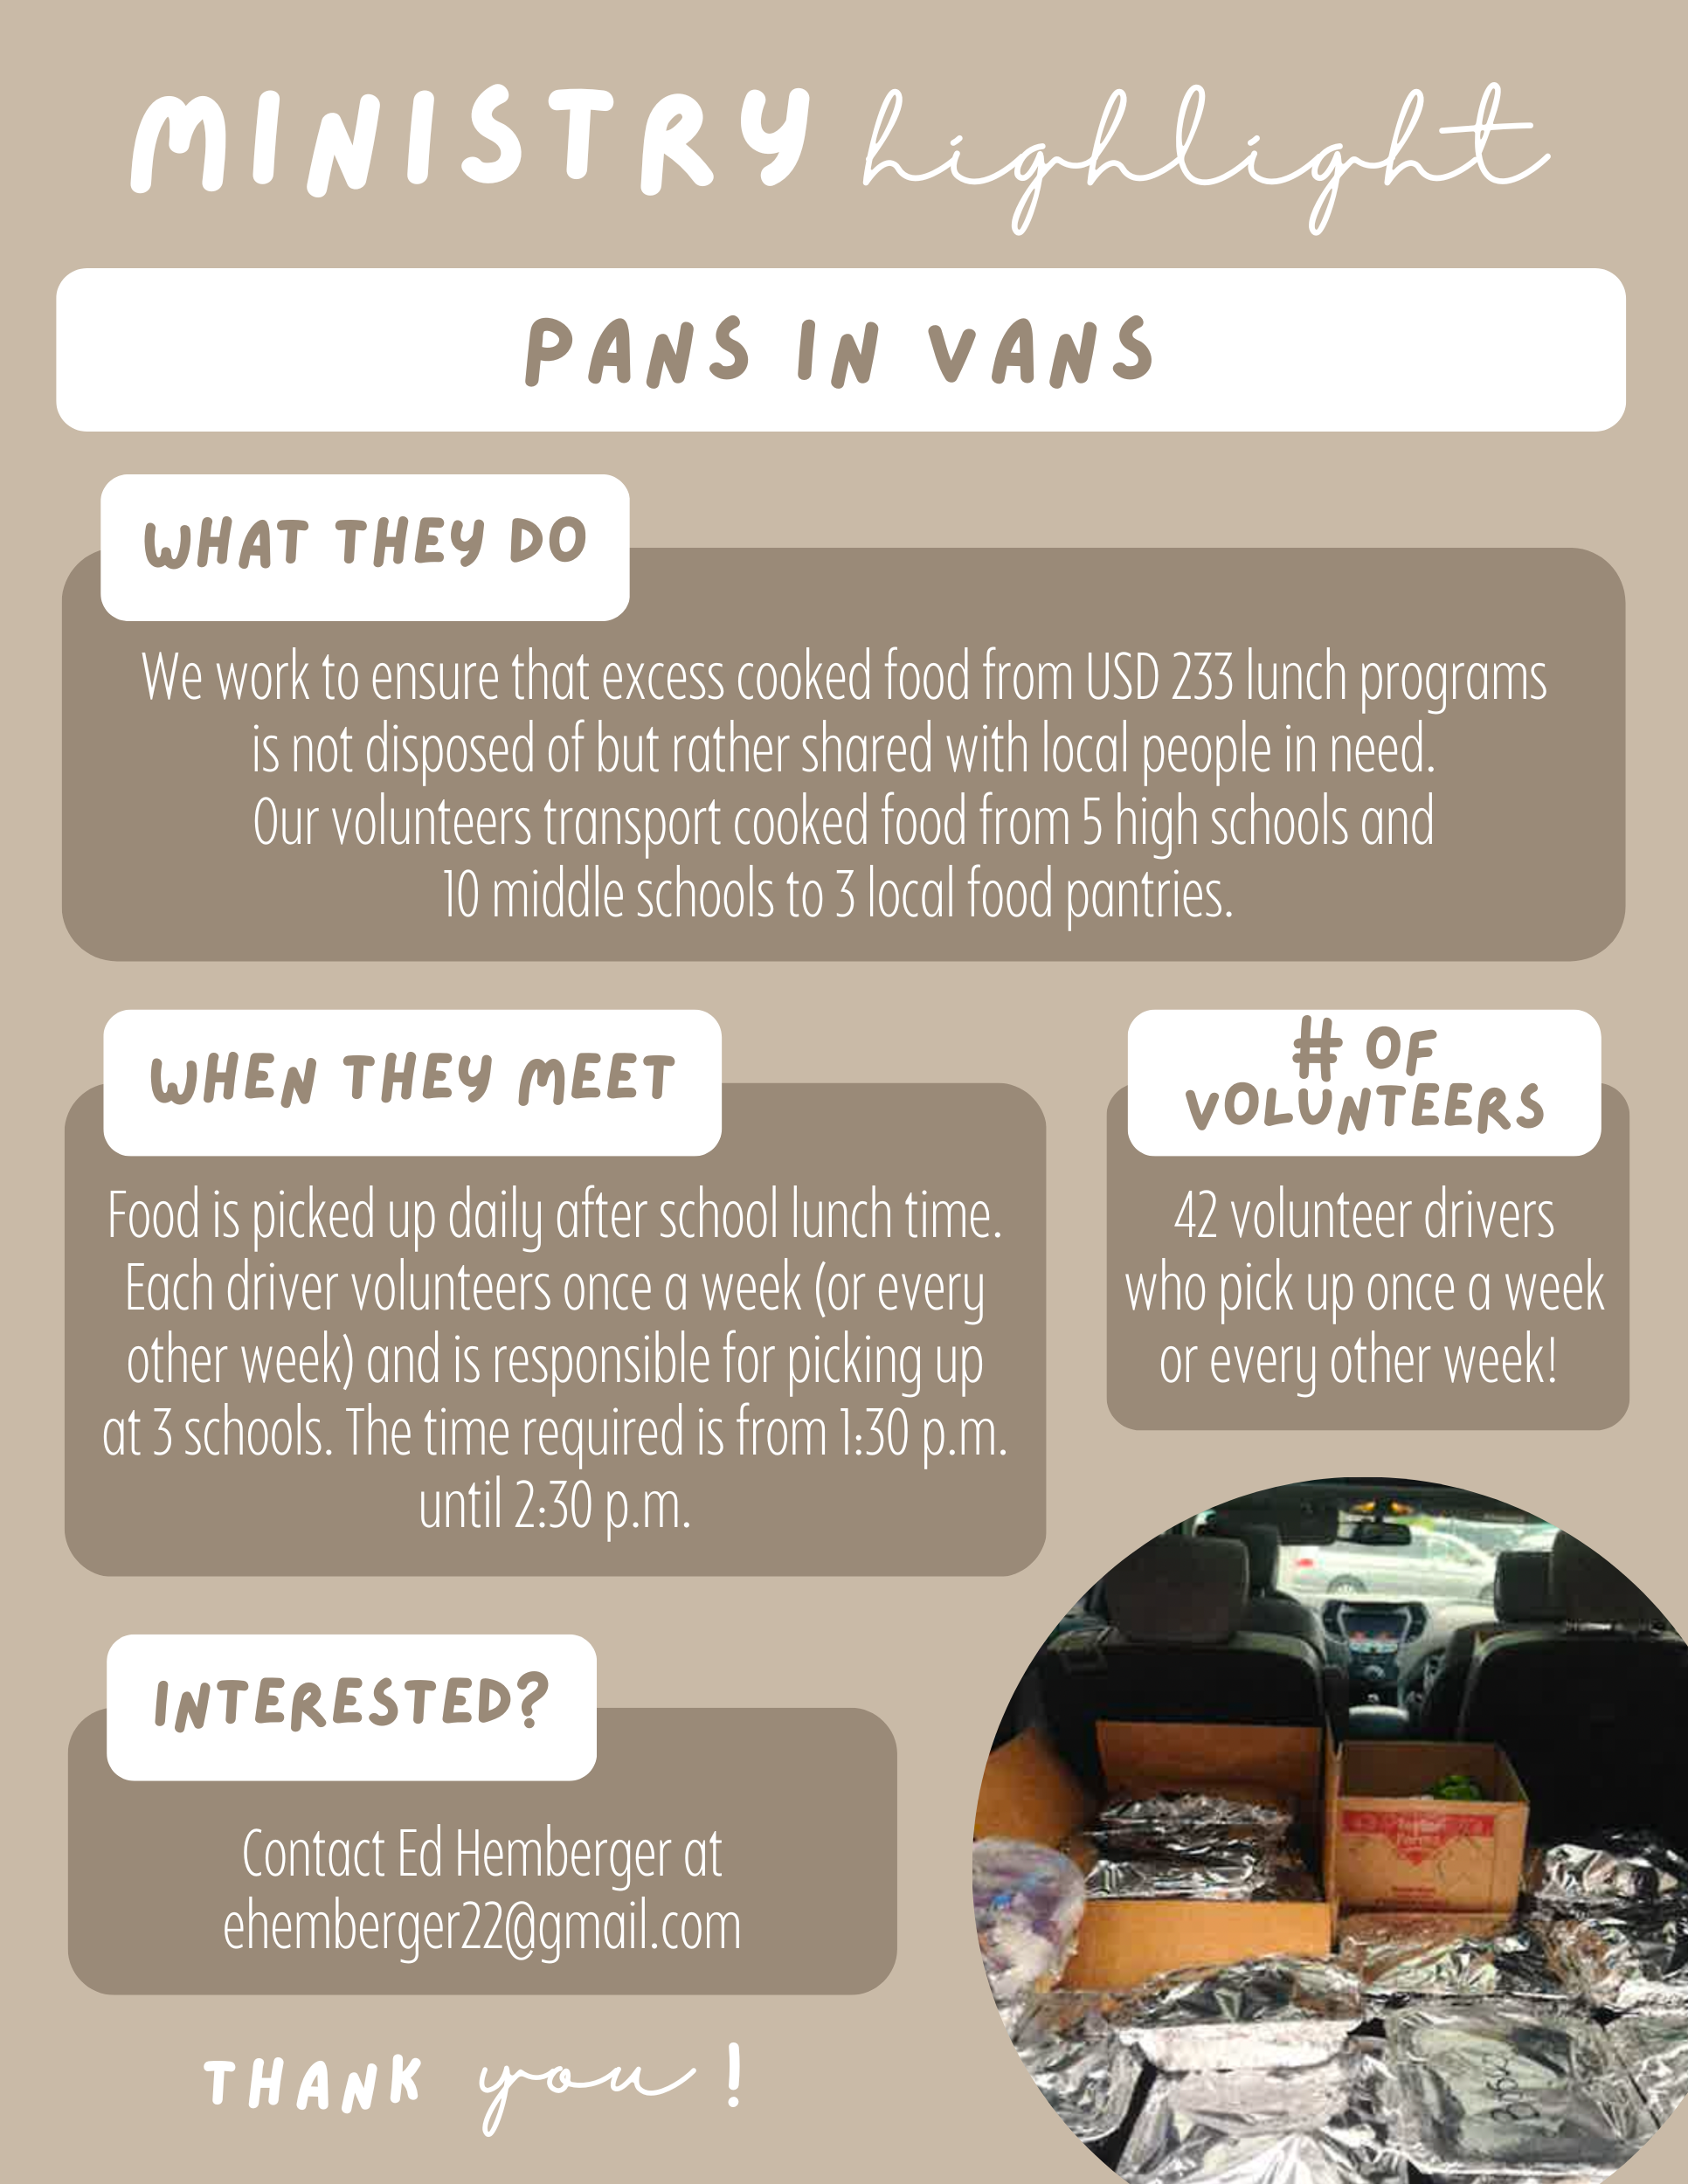 pans in vans ministry highlight